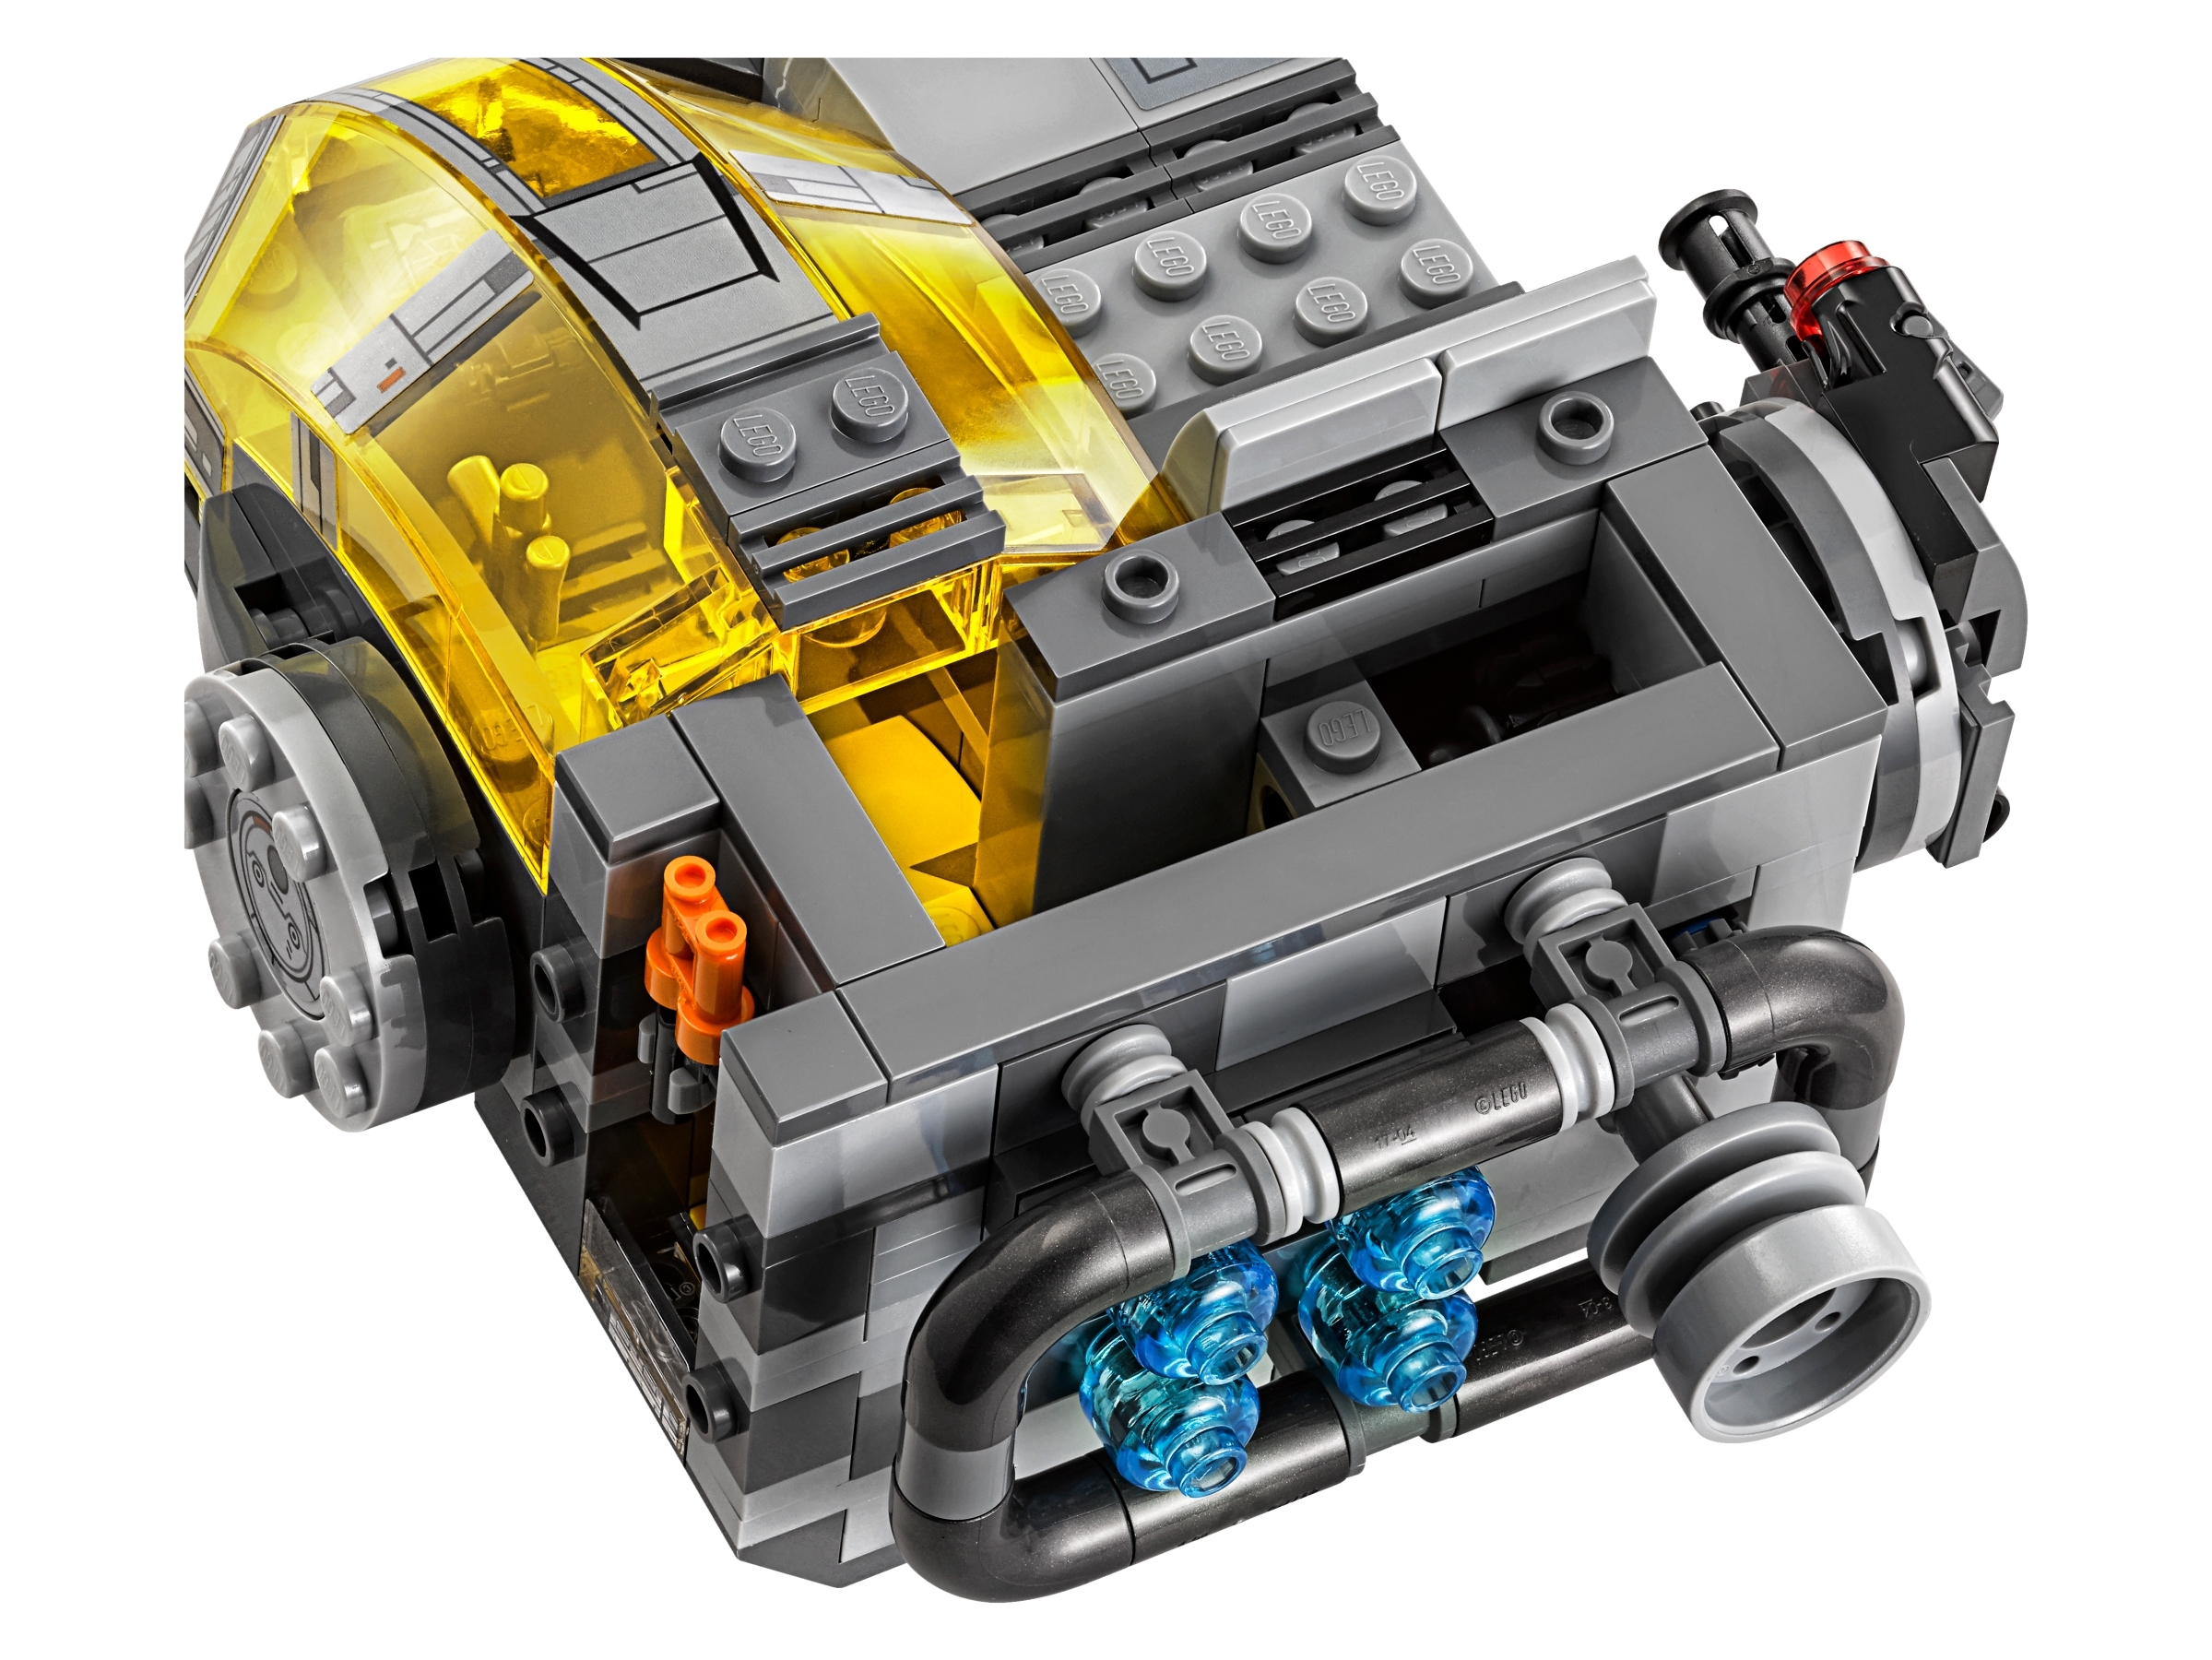 Split from 75176 Model Only LEGO: Star Wars Resistance Transport Pod New. 